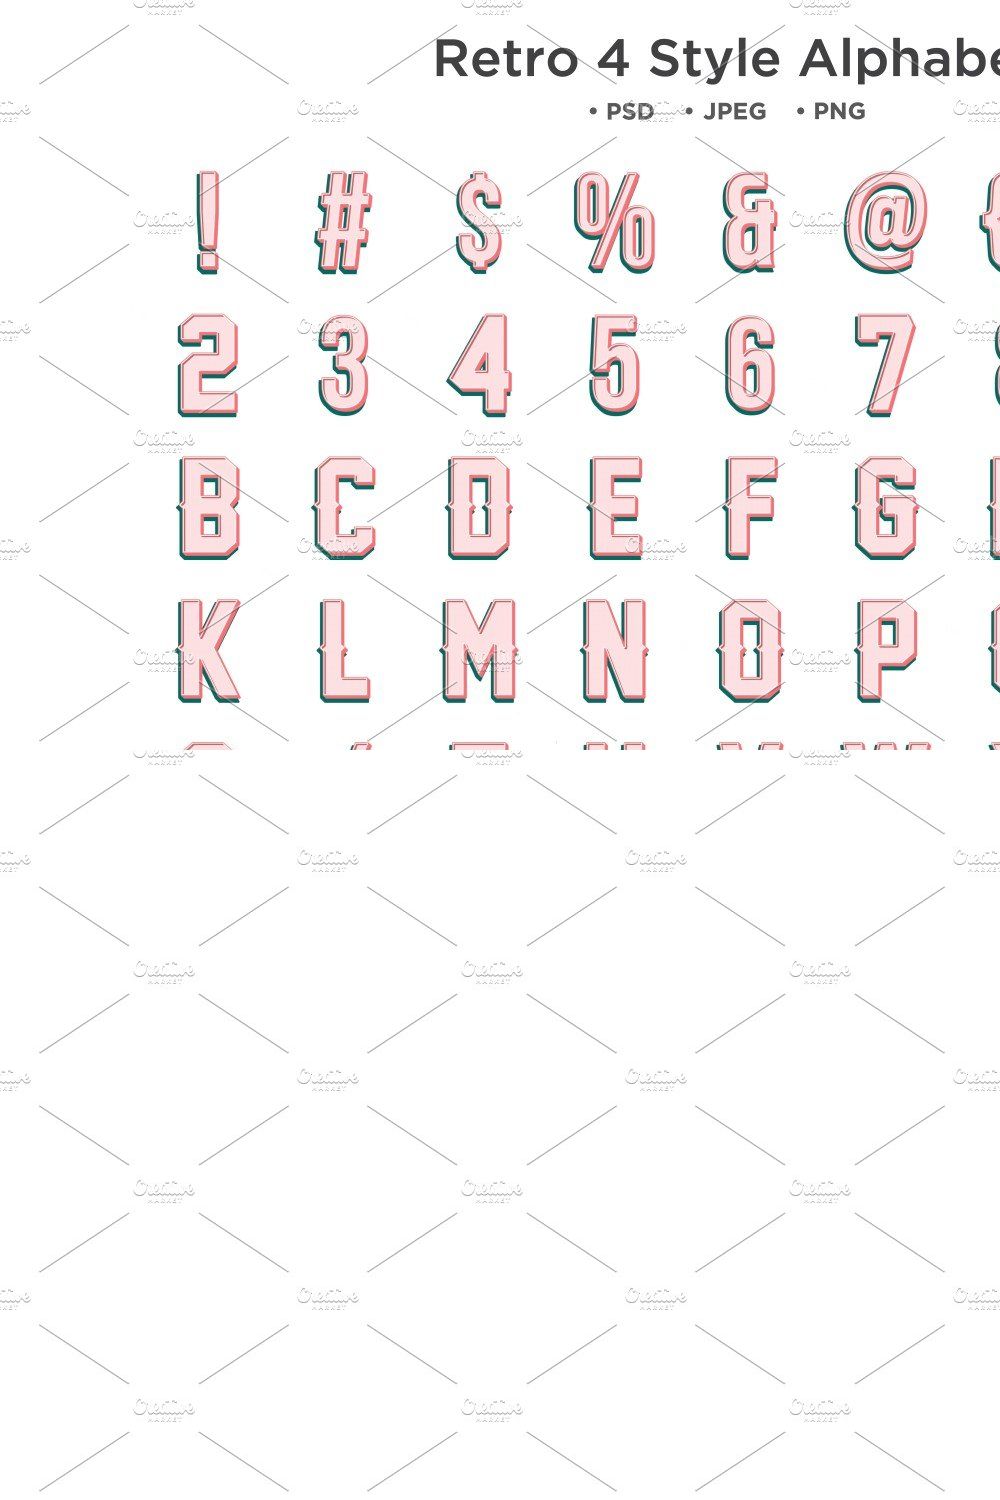 Retro 4 Style Alphabet Typography pinterest preview image.